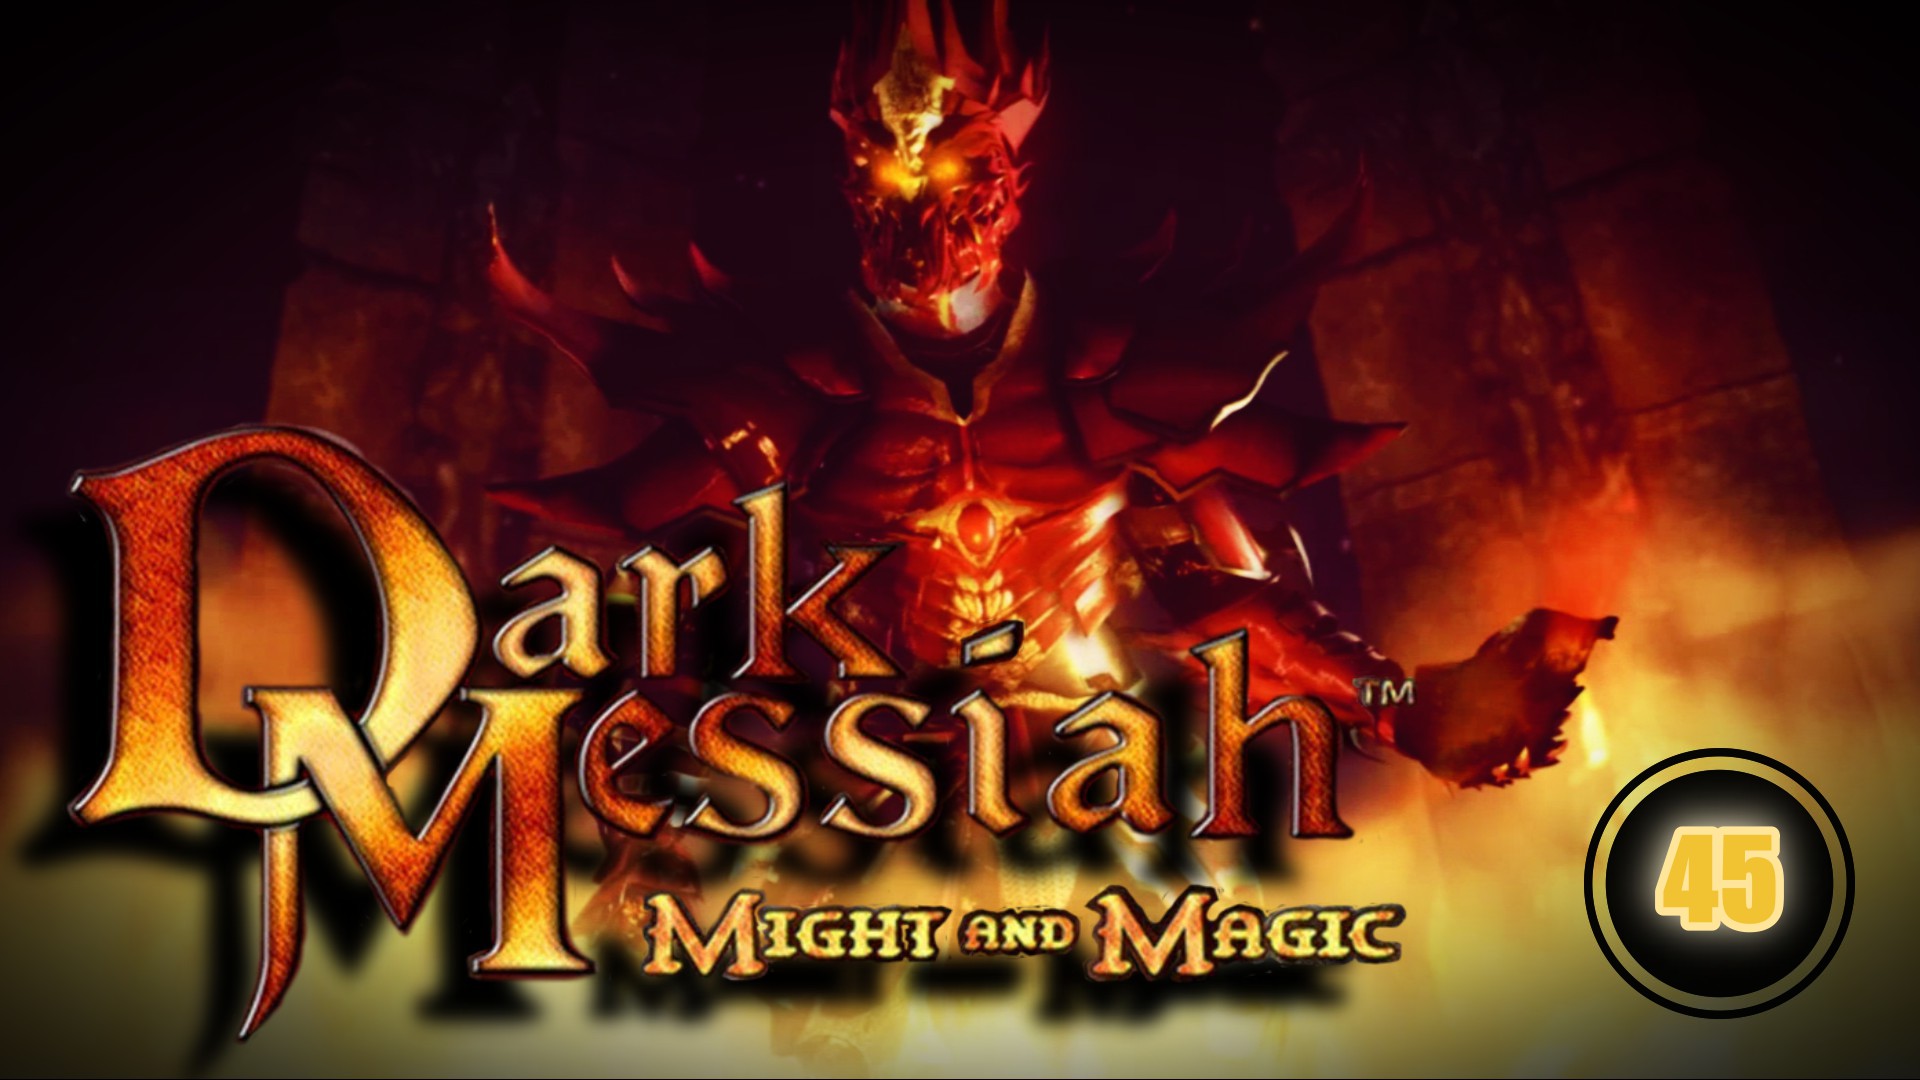 Dark Messiah of Might and Magic 45